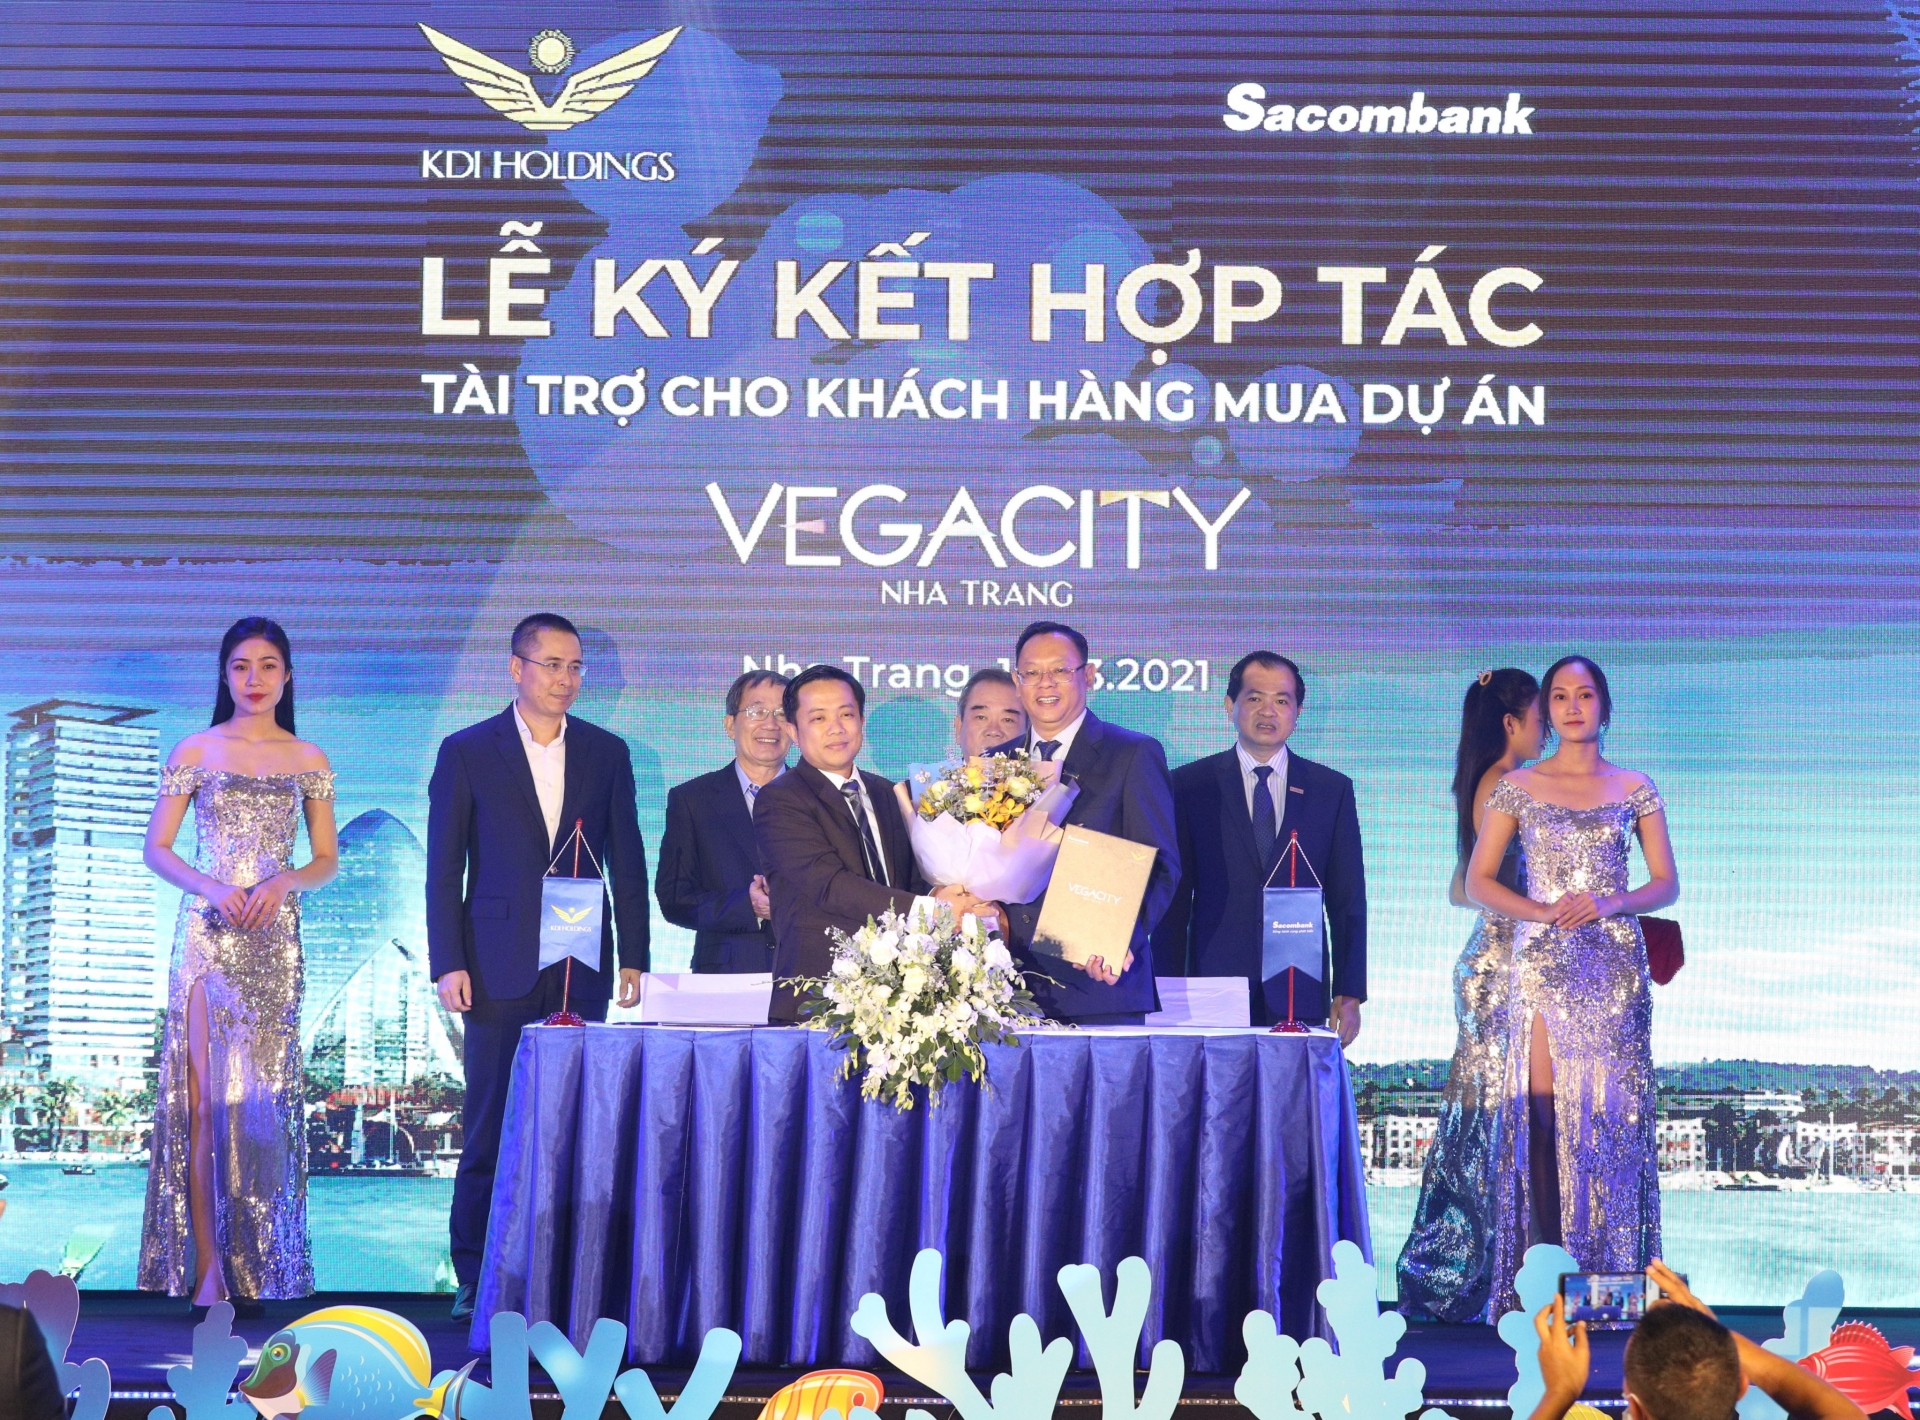 KDI Holdings announces strategic partners in Vega City Nha Trang